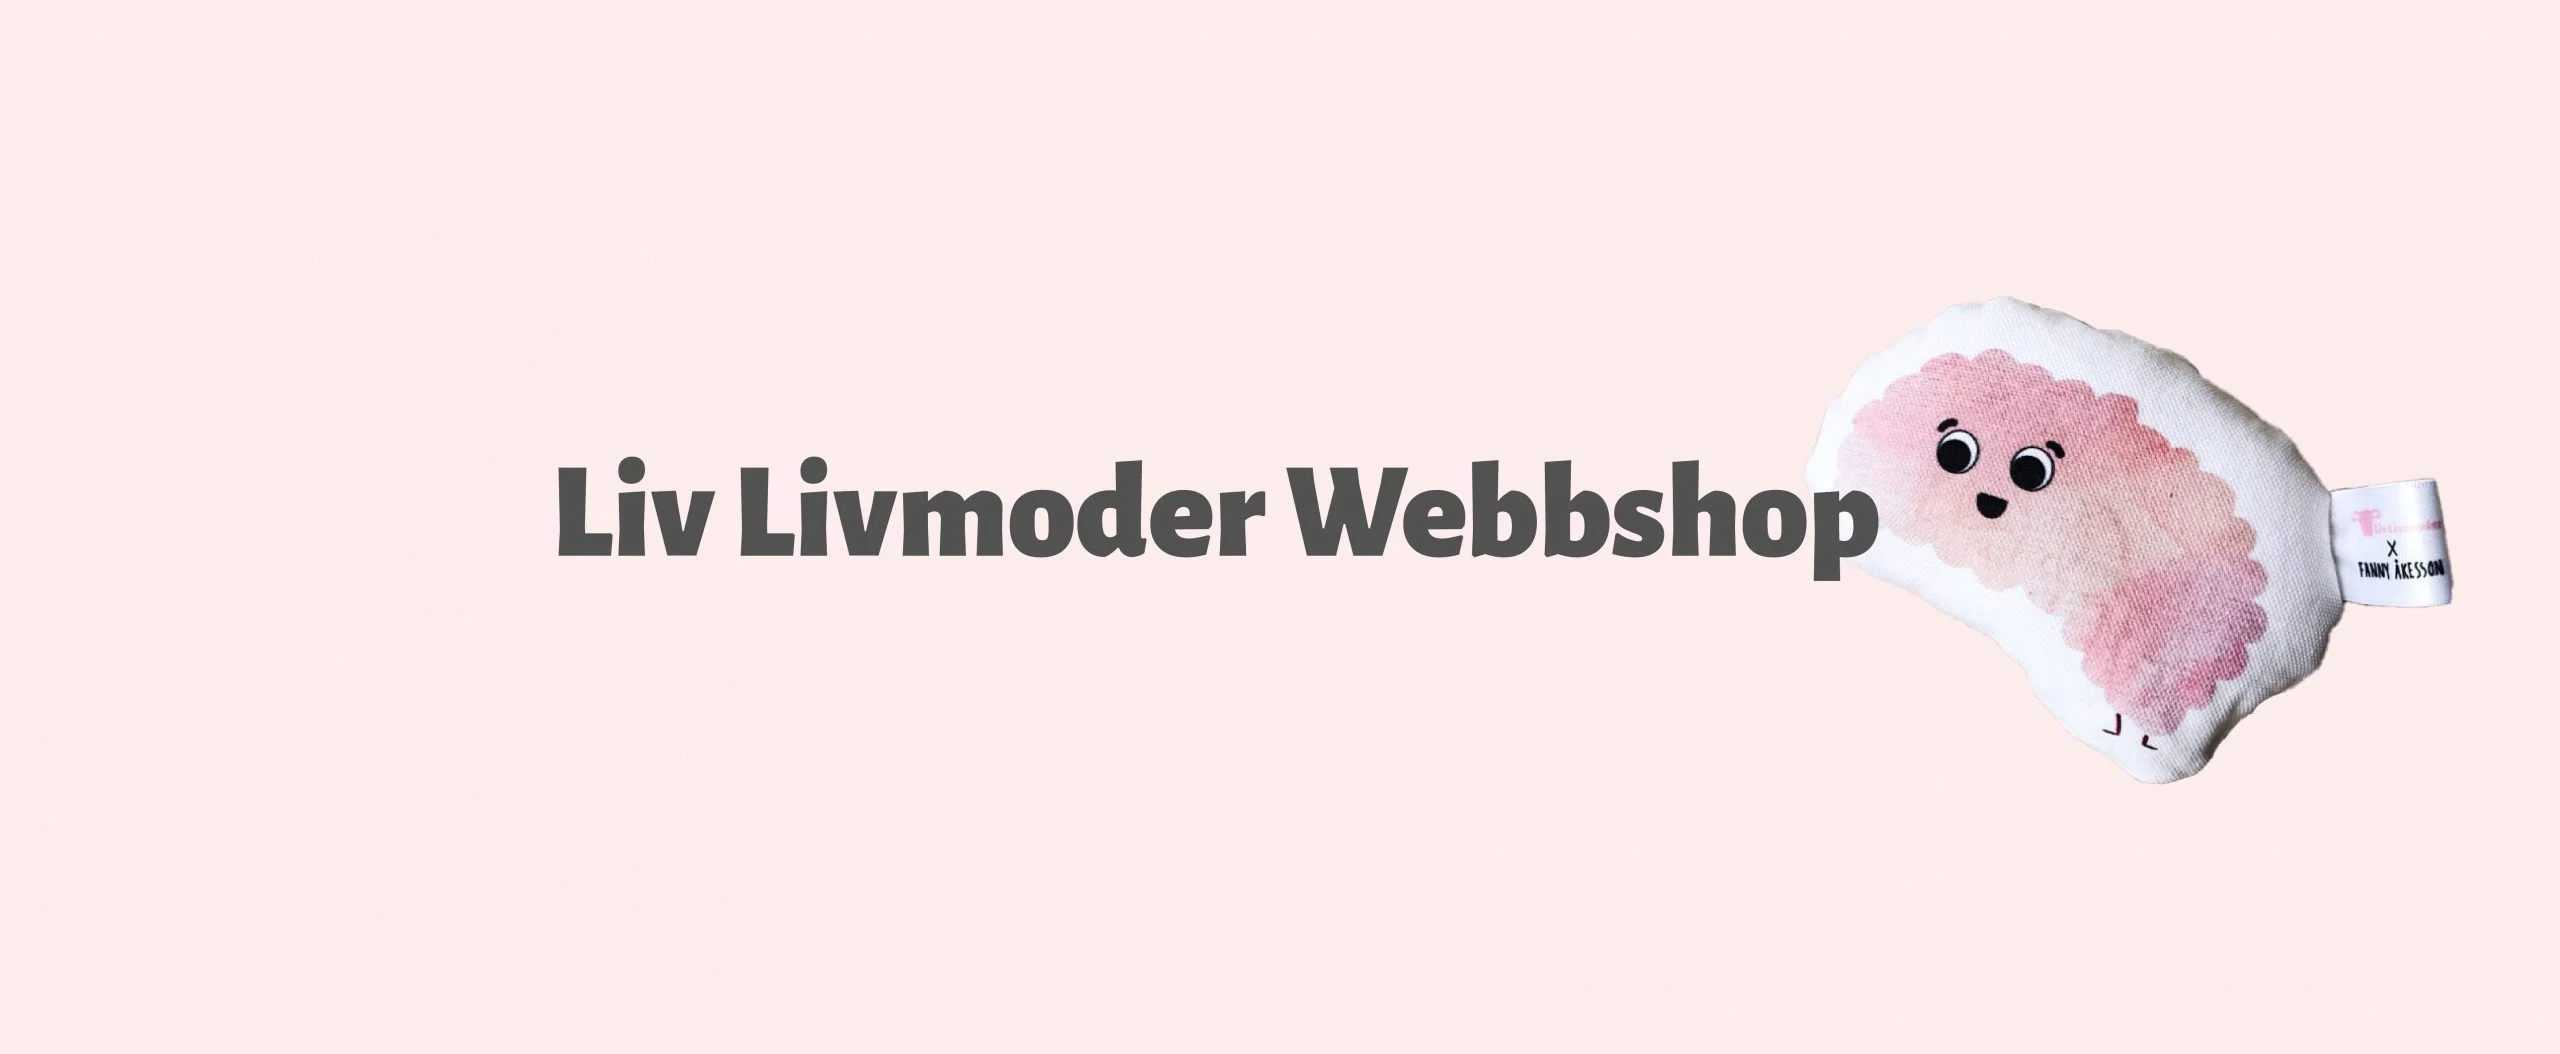 Liv Livmoder Webbshop Banner